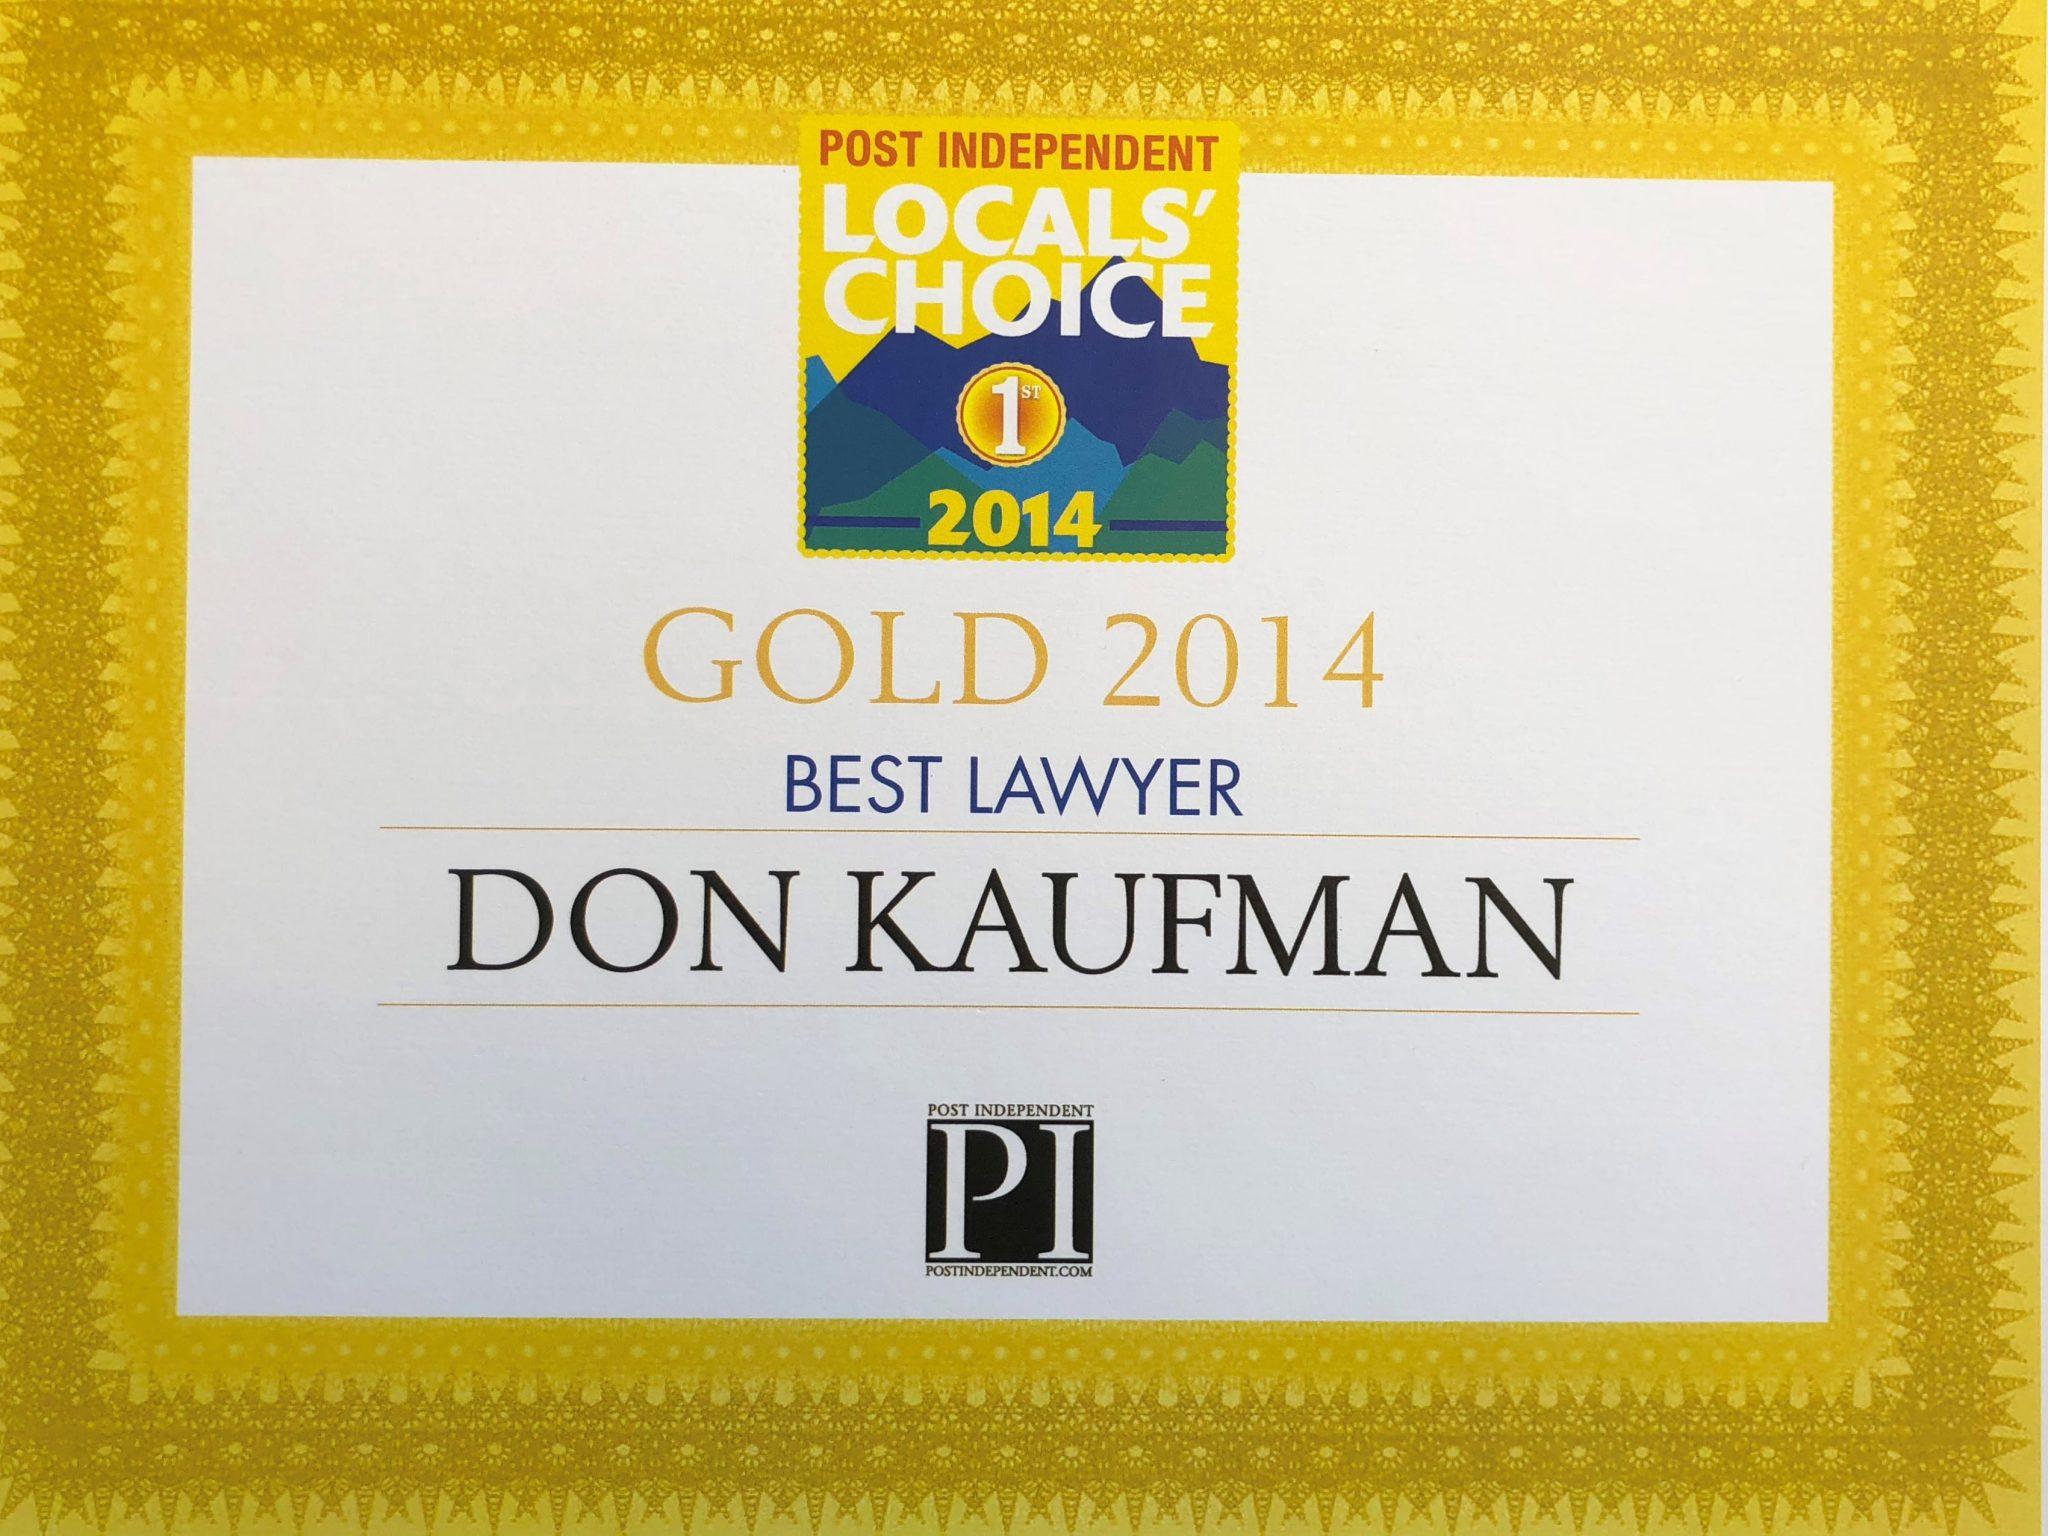 Don Kaufman wins 2014 Locals Choice Award